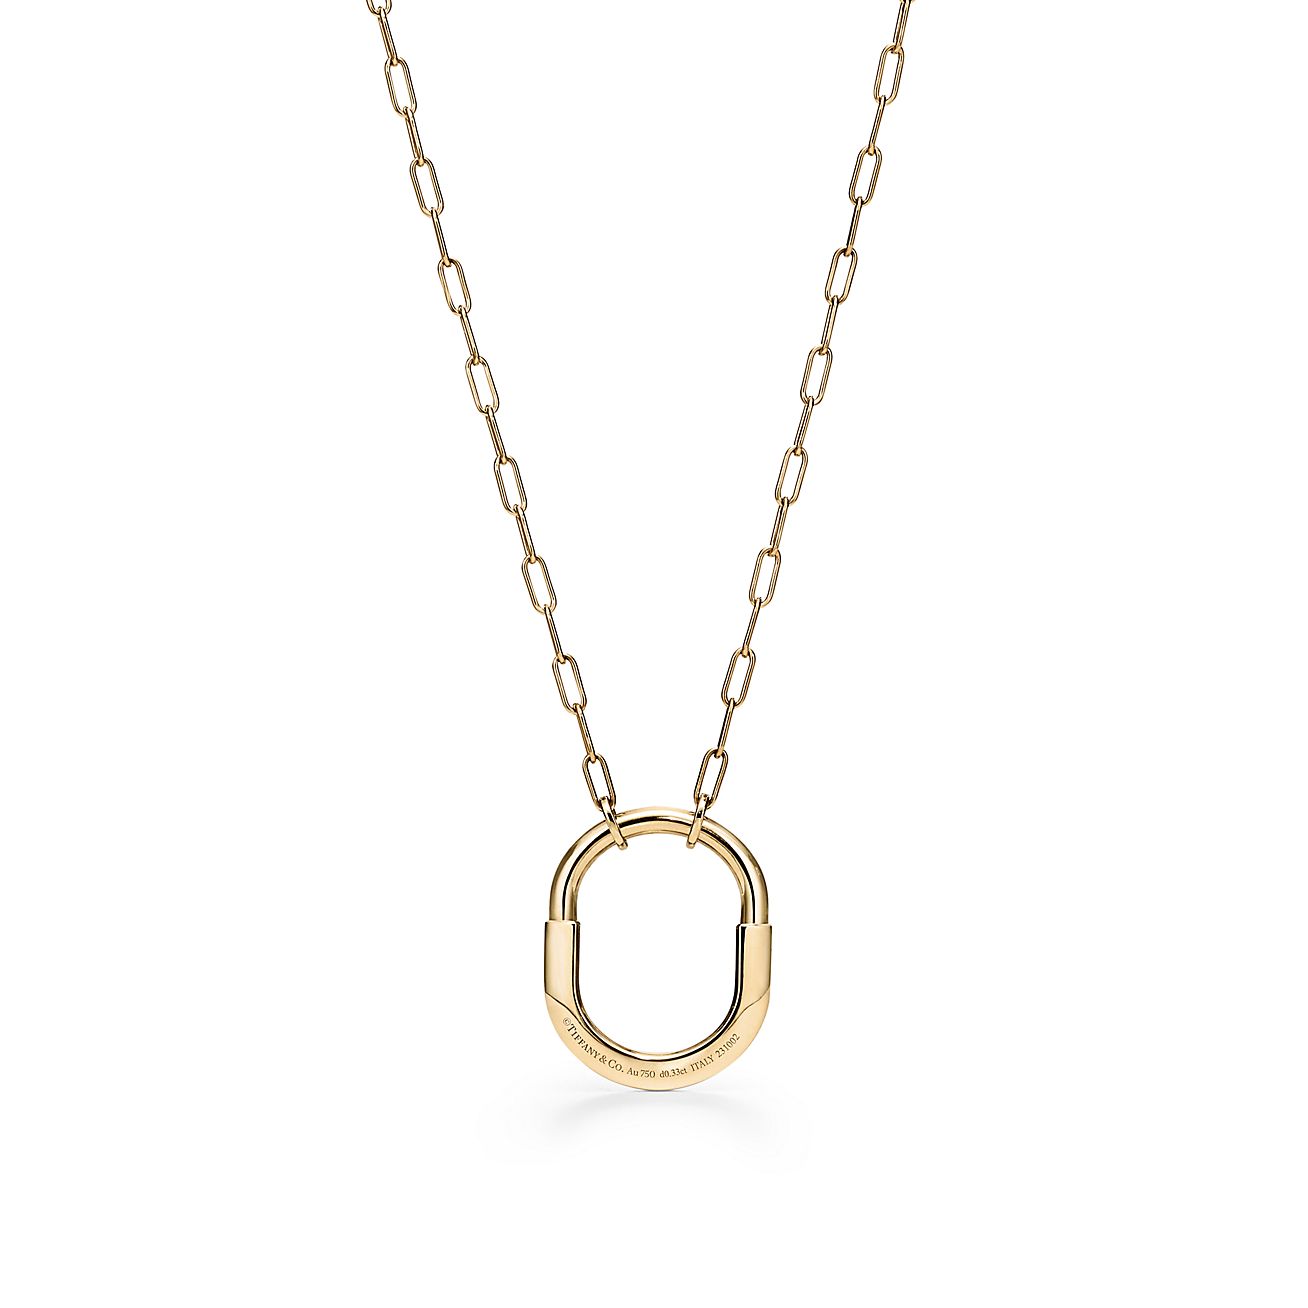 Tiffany's & Co. 1837 Lock Padlock Necklace Pendant Sterling Silver 925 key  USED | eBay